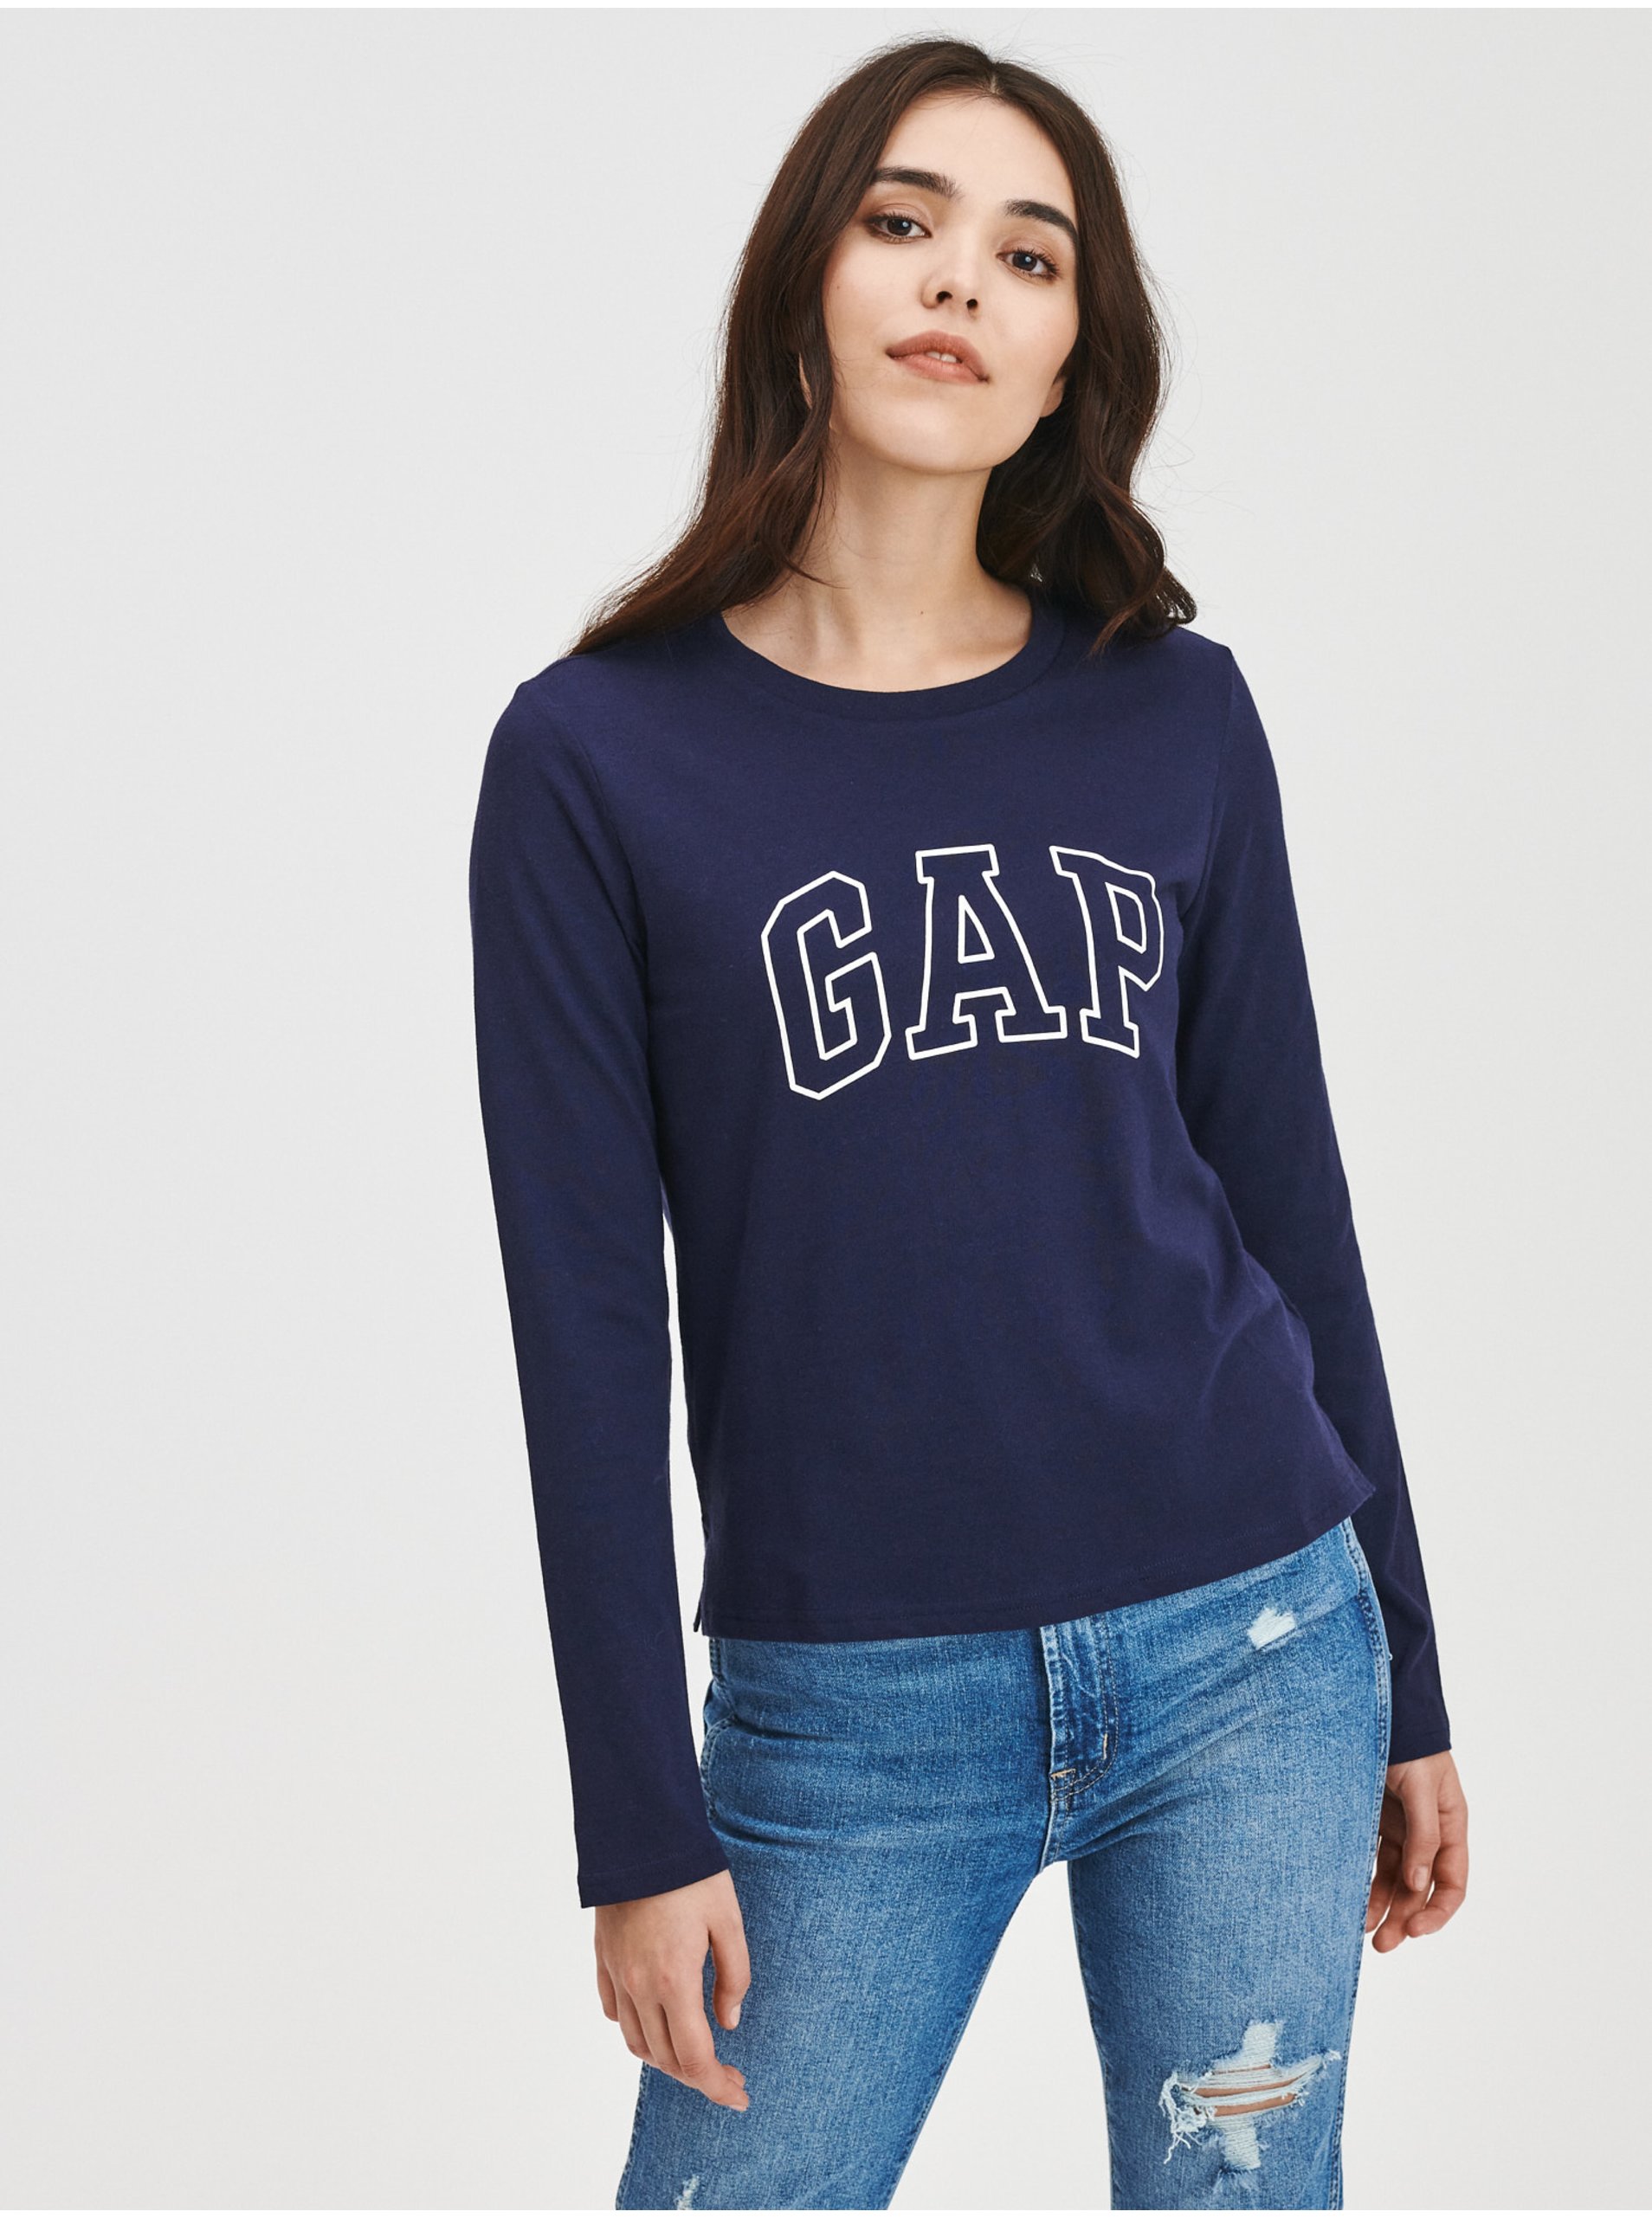 Lacno Modré dámske tričko easy s logom GAP